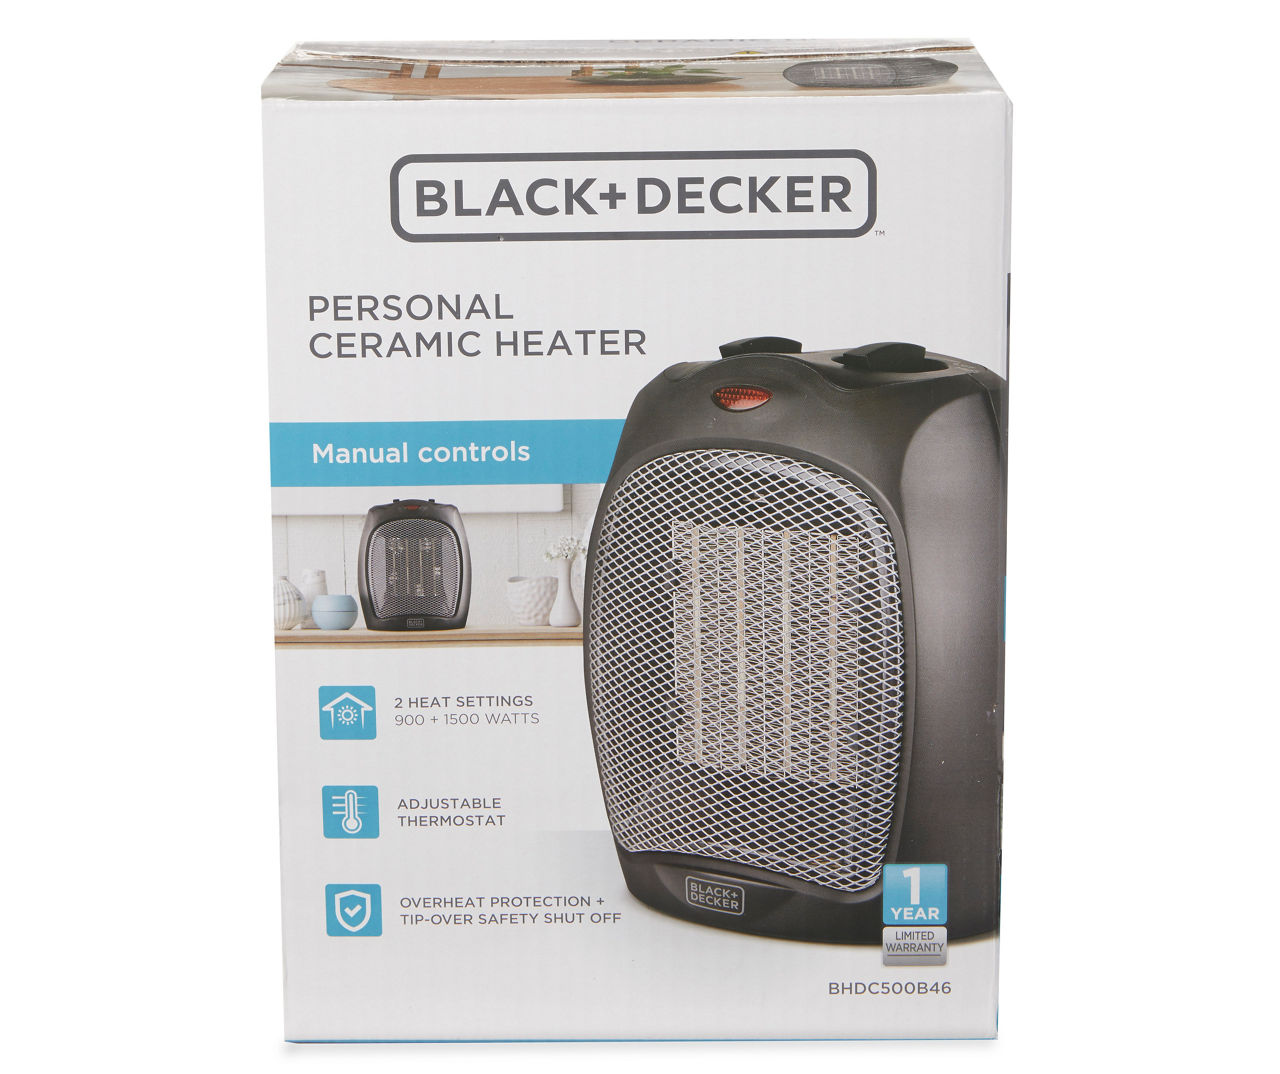 Black + Decker Black Personal Ceramic Heater